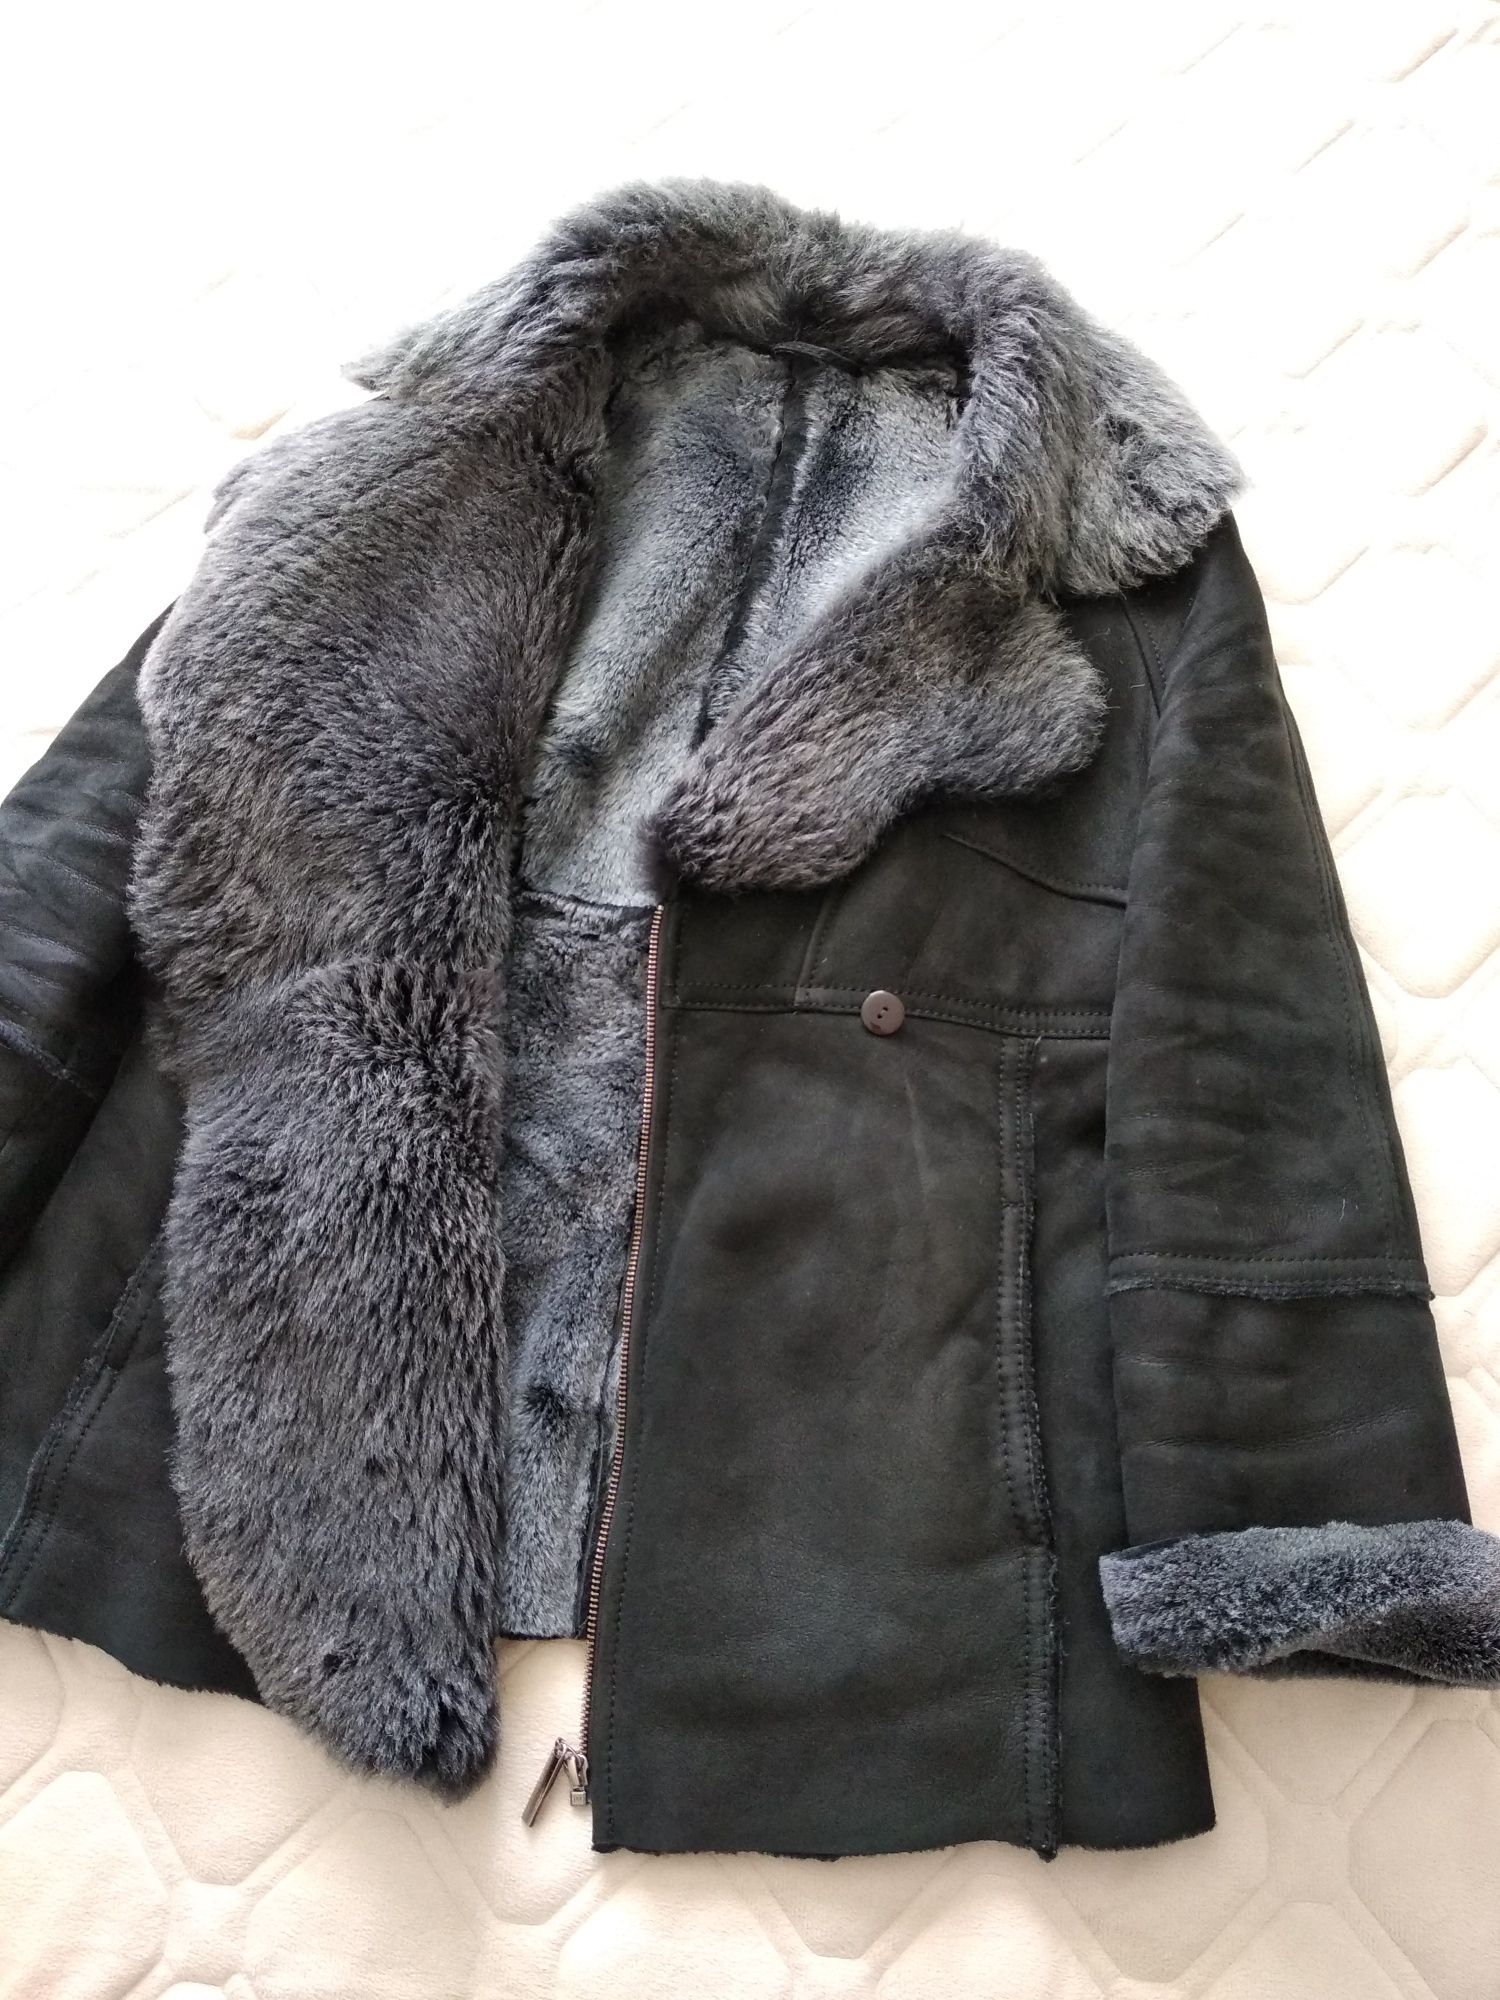 Дубльонка LA REINE BLANCHE, шуба, пальто, зима